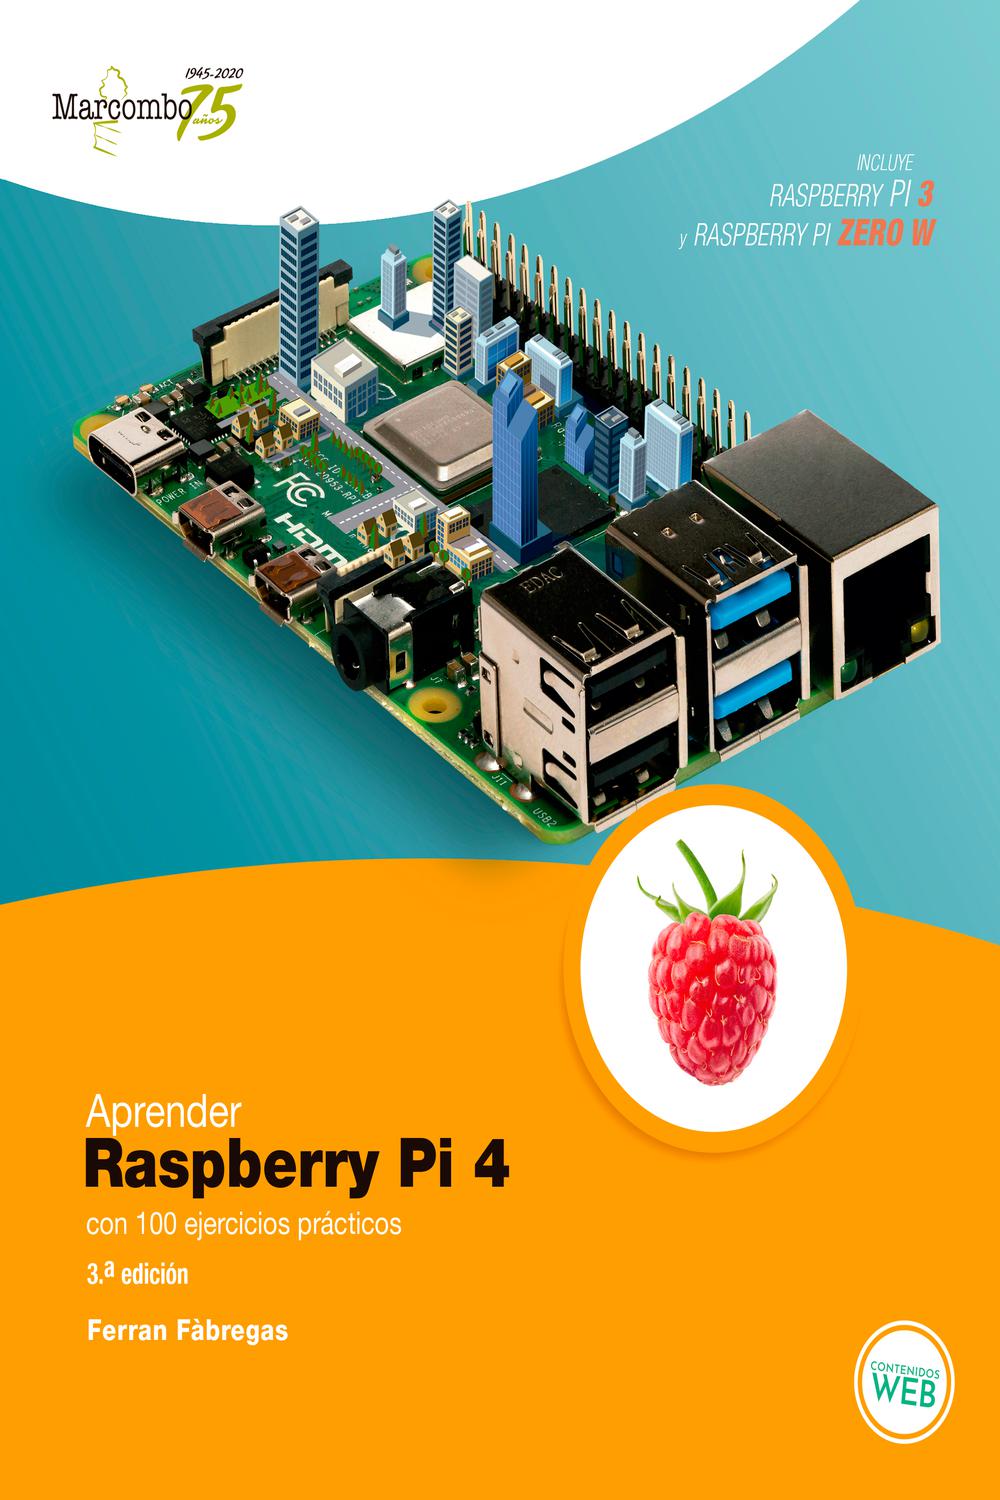 Aprender Raspberry Pi 4 con 100 ejercicios prácticos - Ferran Fabregas